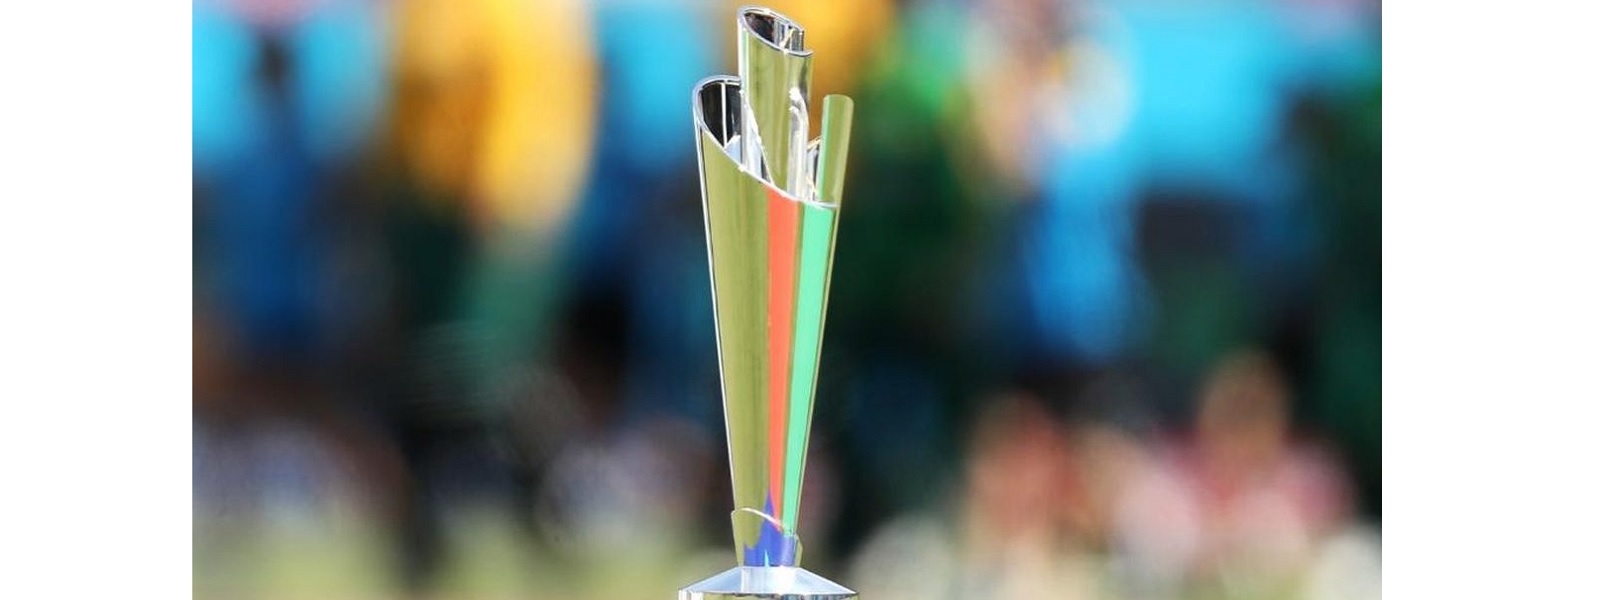 2022 T20 உலகக்கிண்ண கிரிக்கெட் தொடருக்கான போட்டி அட்டவணை வௌியீடு